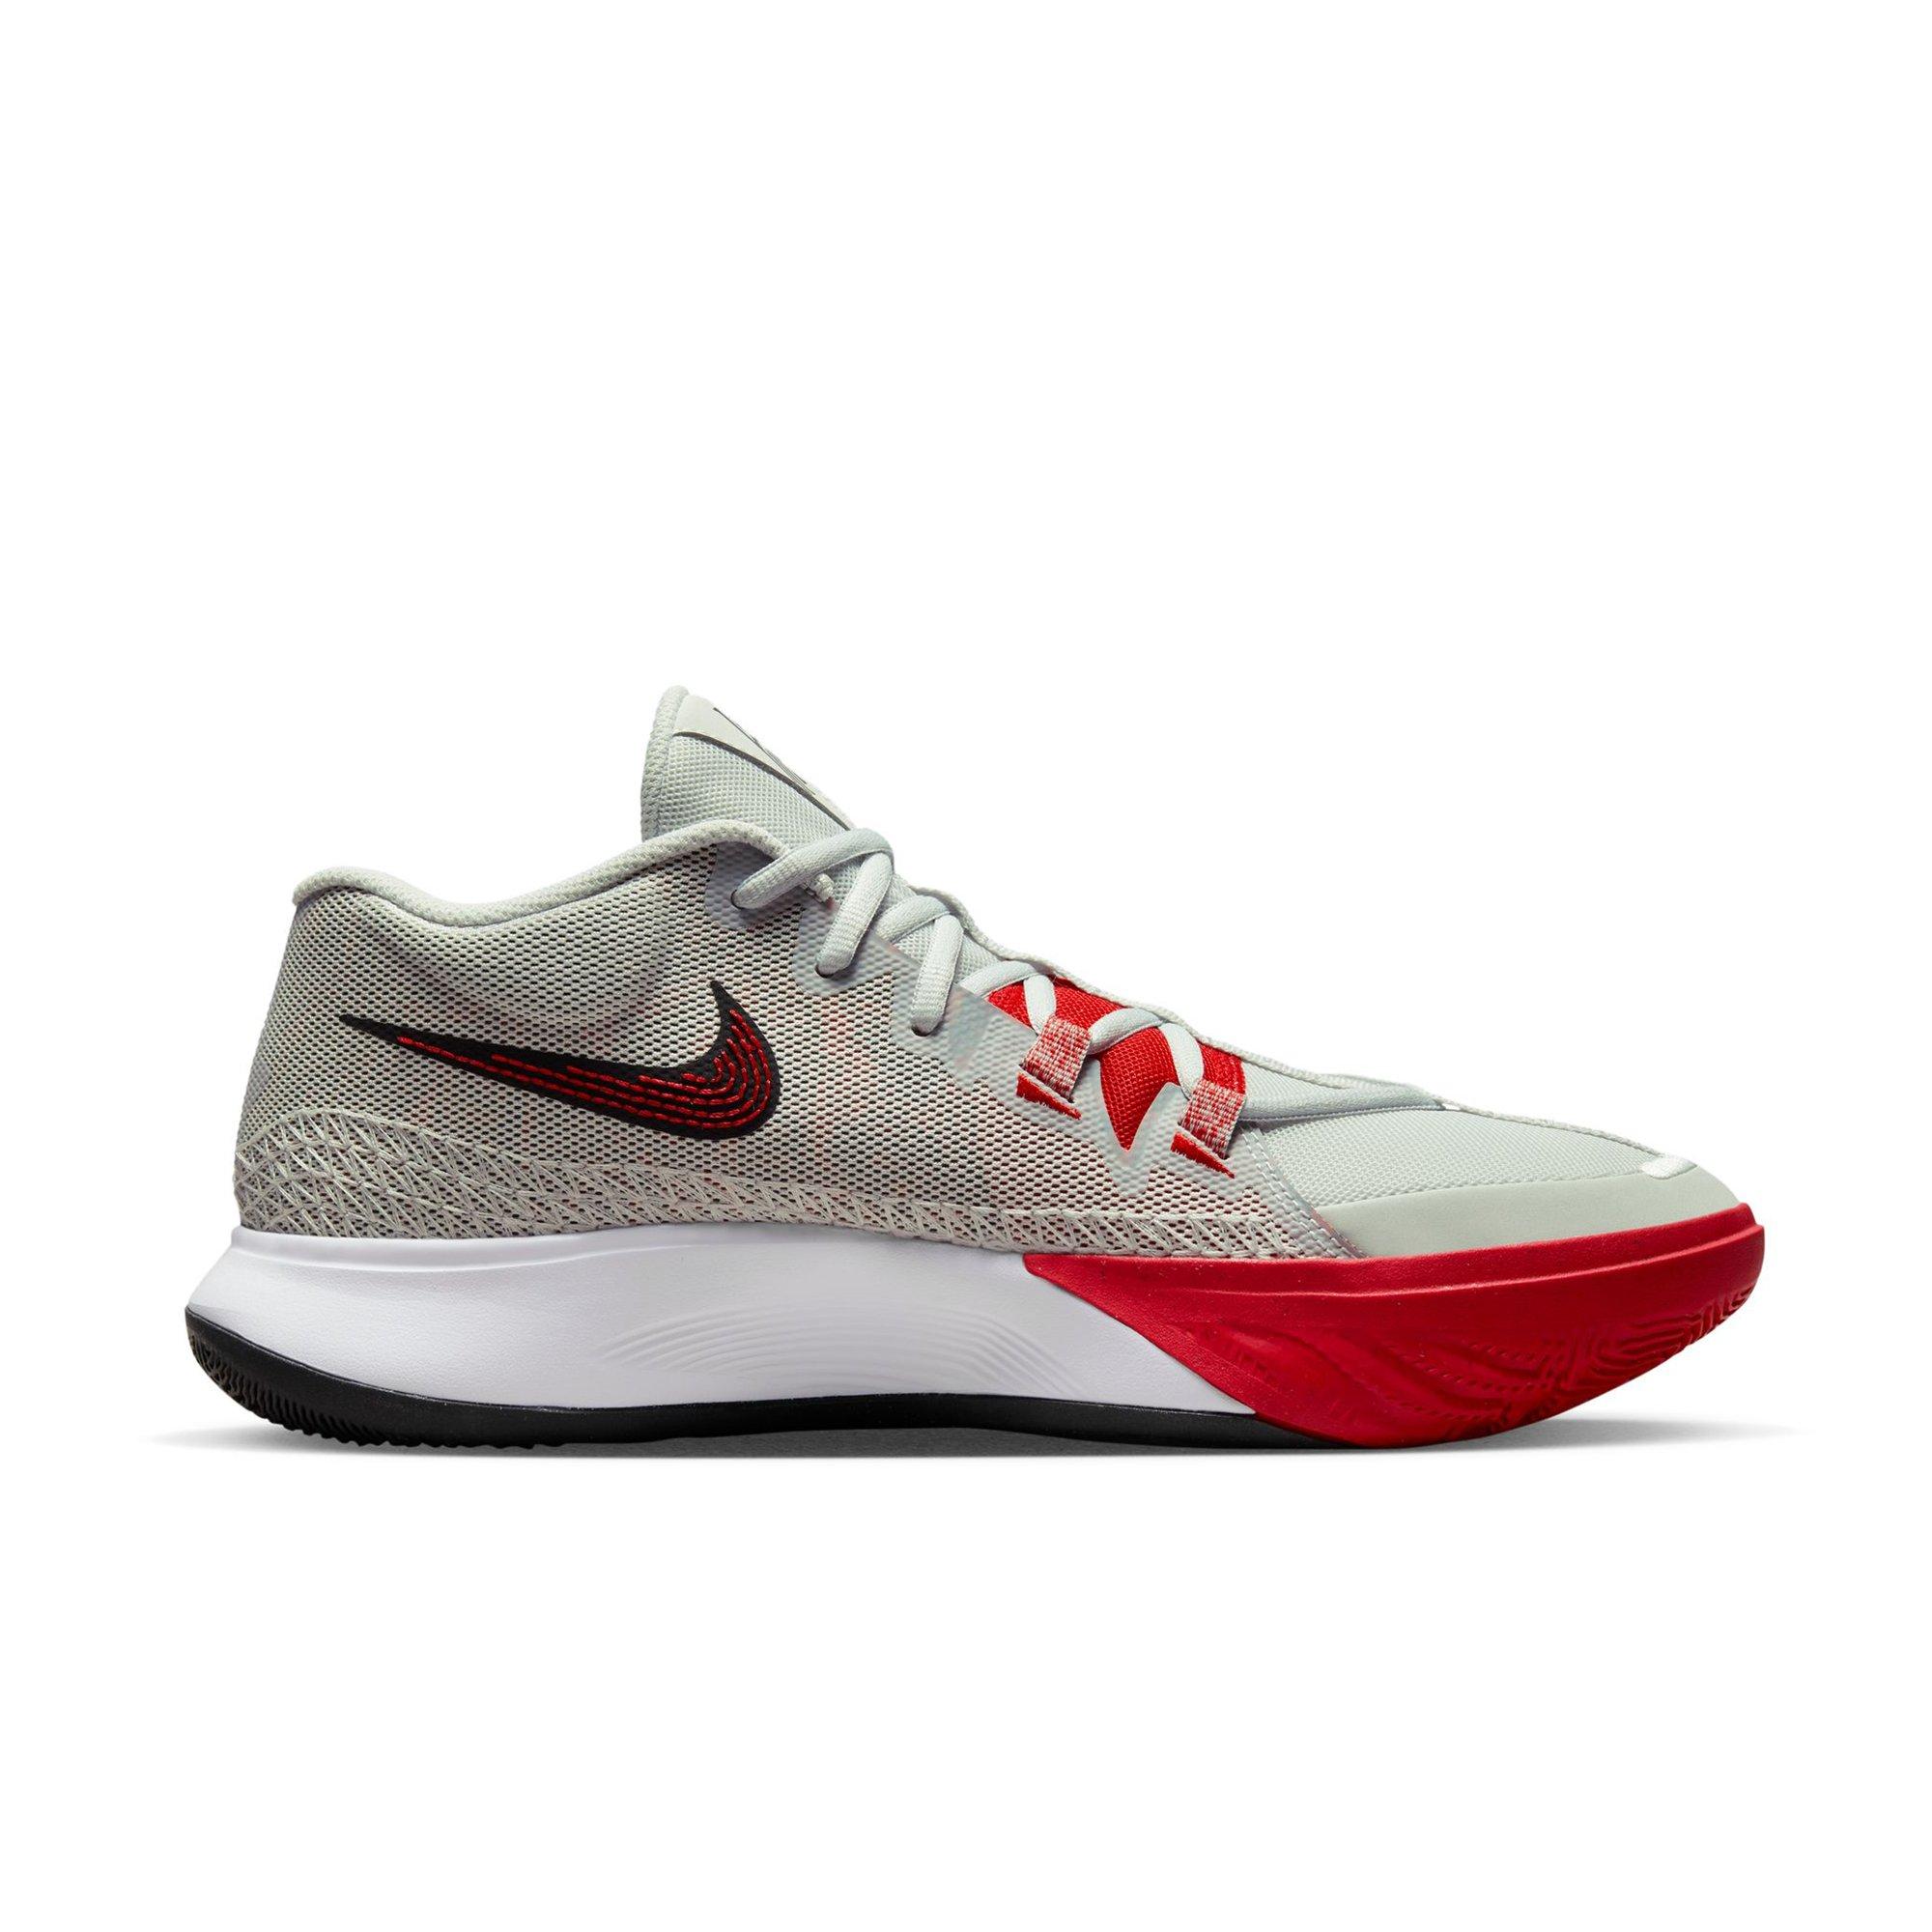 Nike Flytrap "Photon Red/White" Basketball Shoe